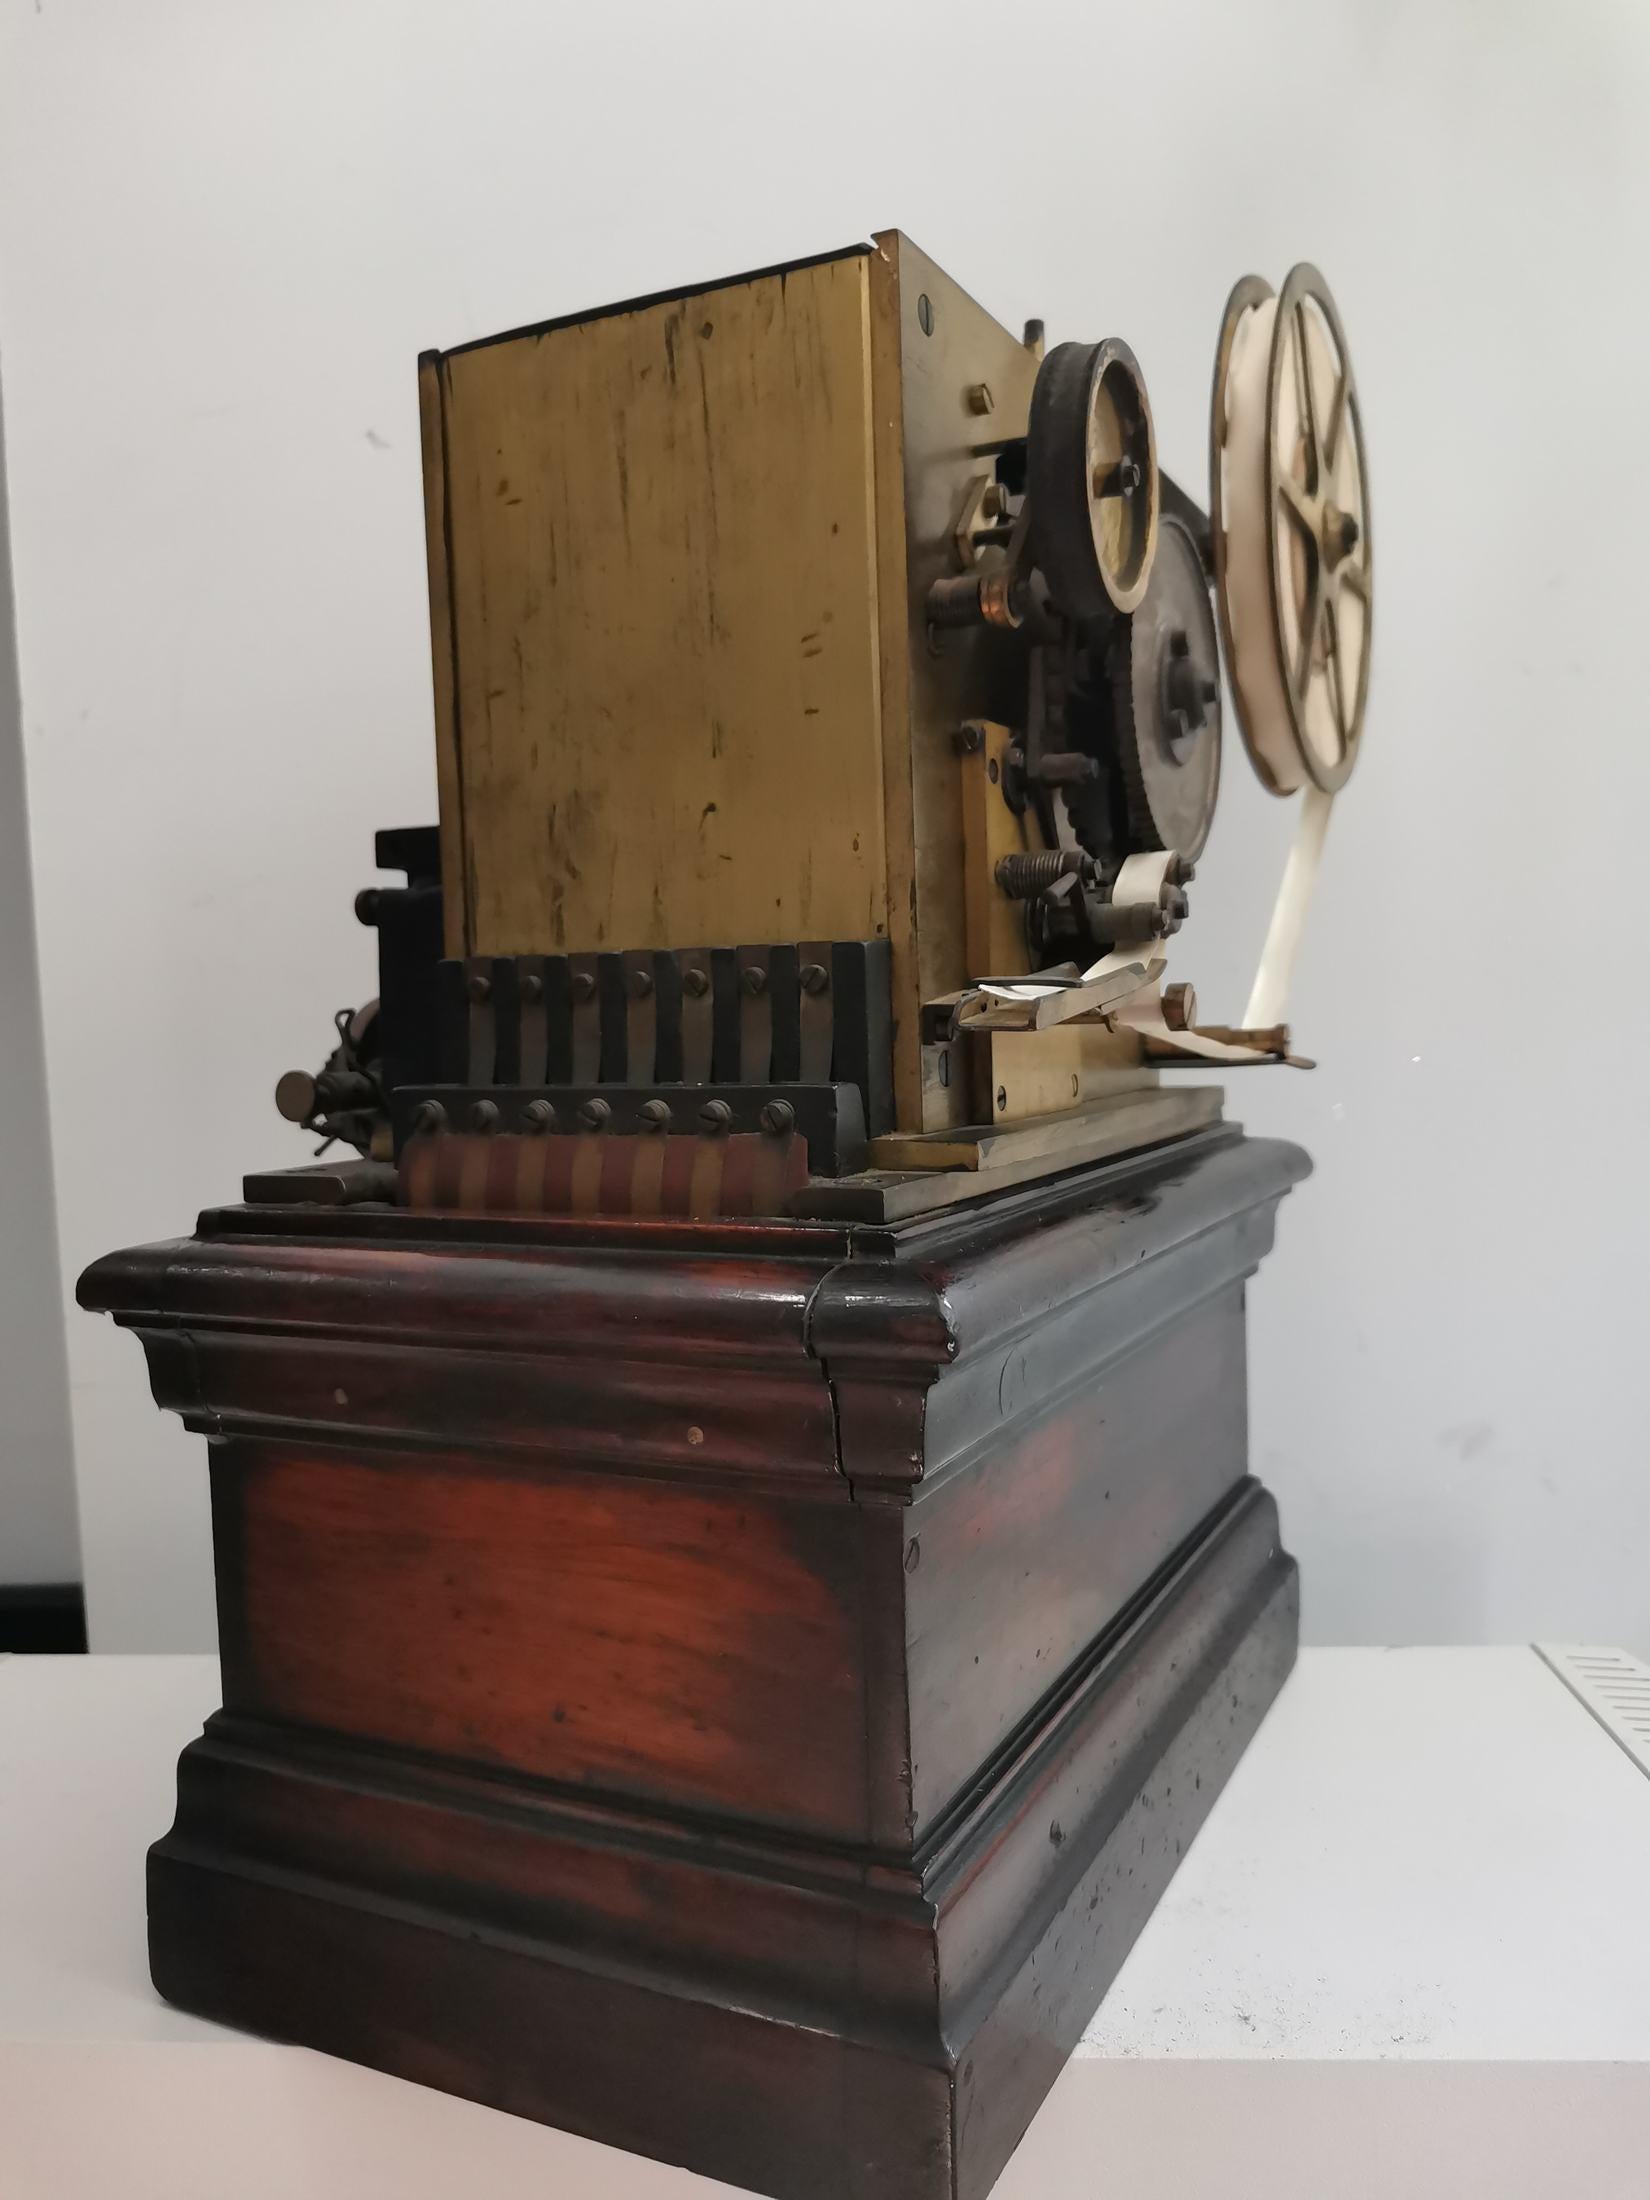 Baudot Multiple-Impression Telegraph, c. 1900 Manufactured by J Carpentier Paris For Sale 2